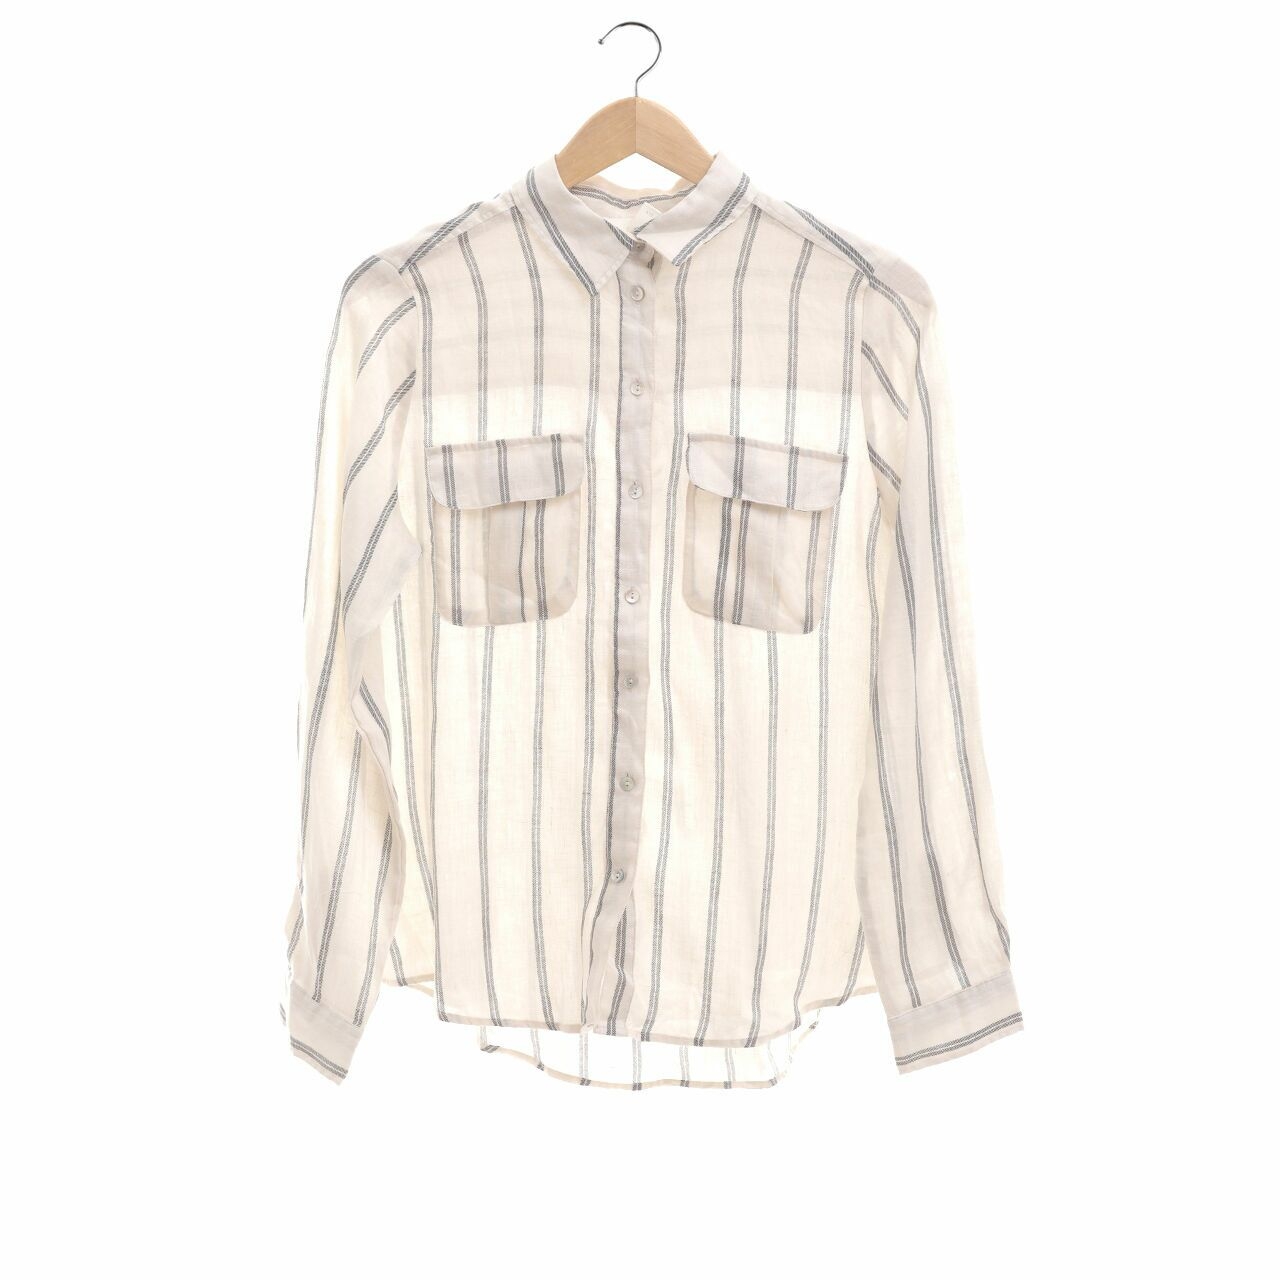 H&M Cream Stripes Shirt